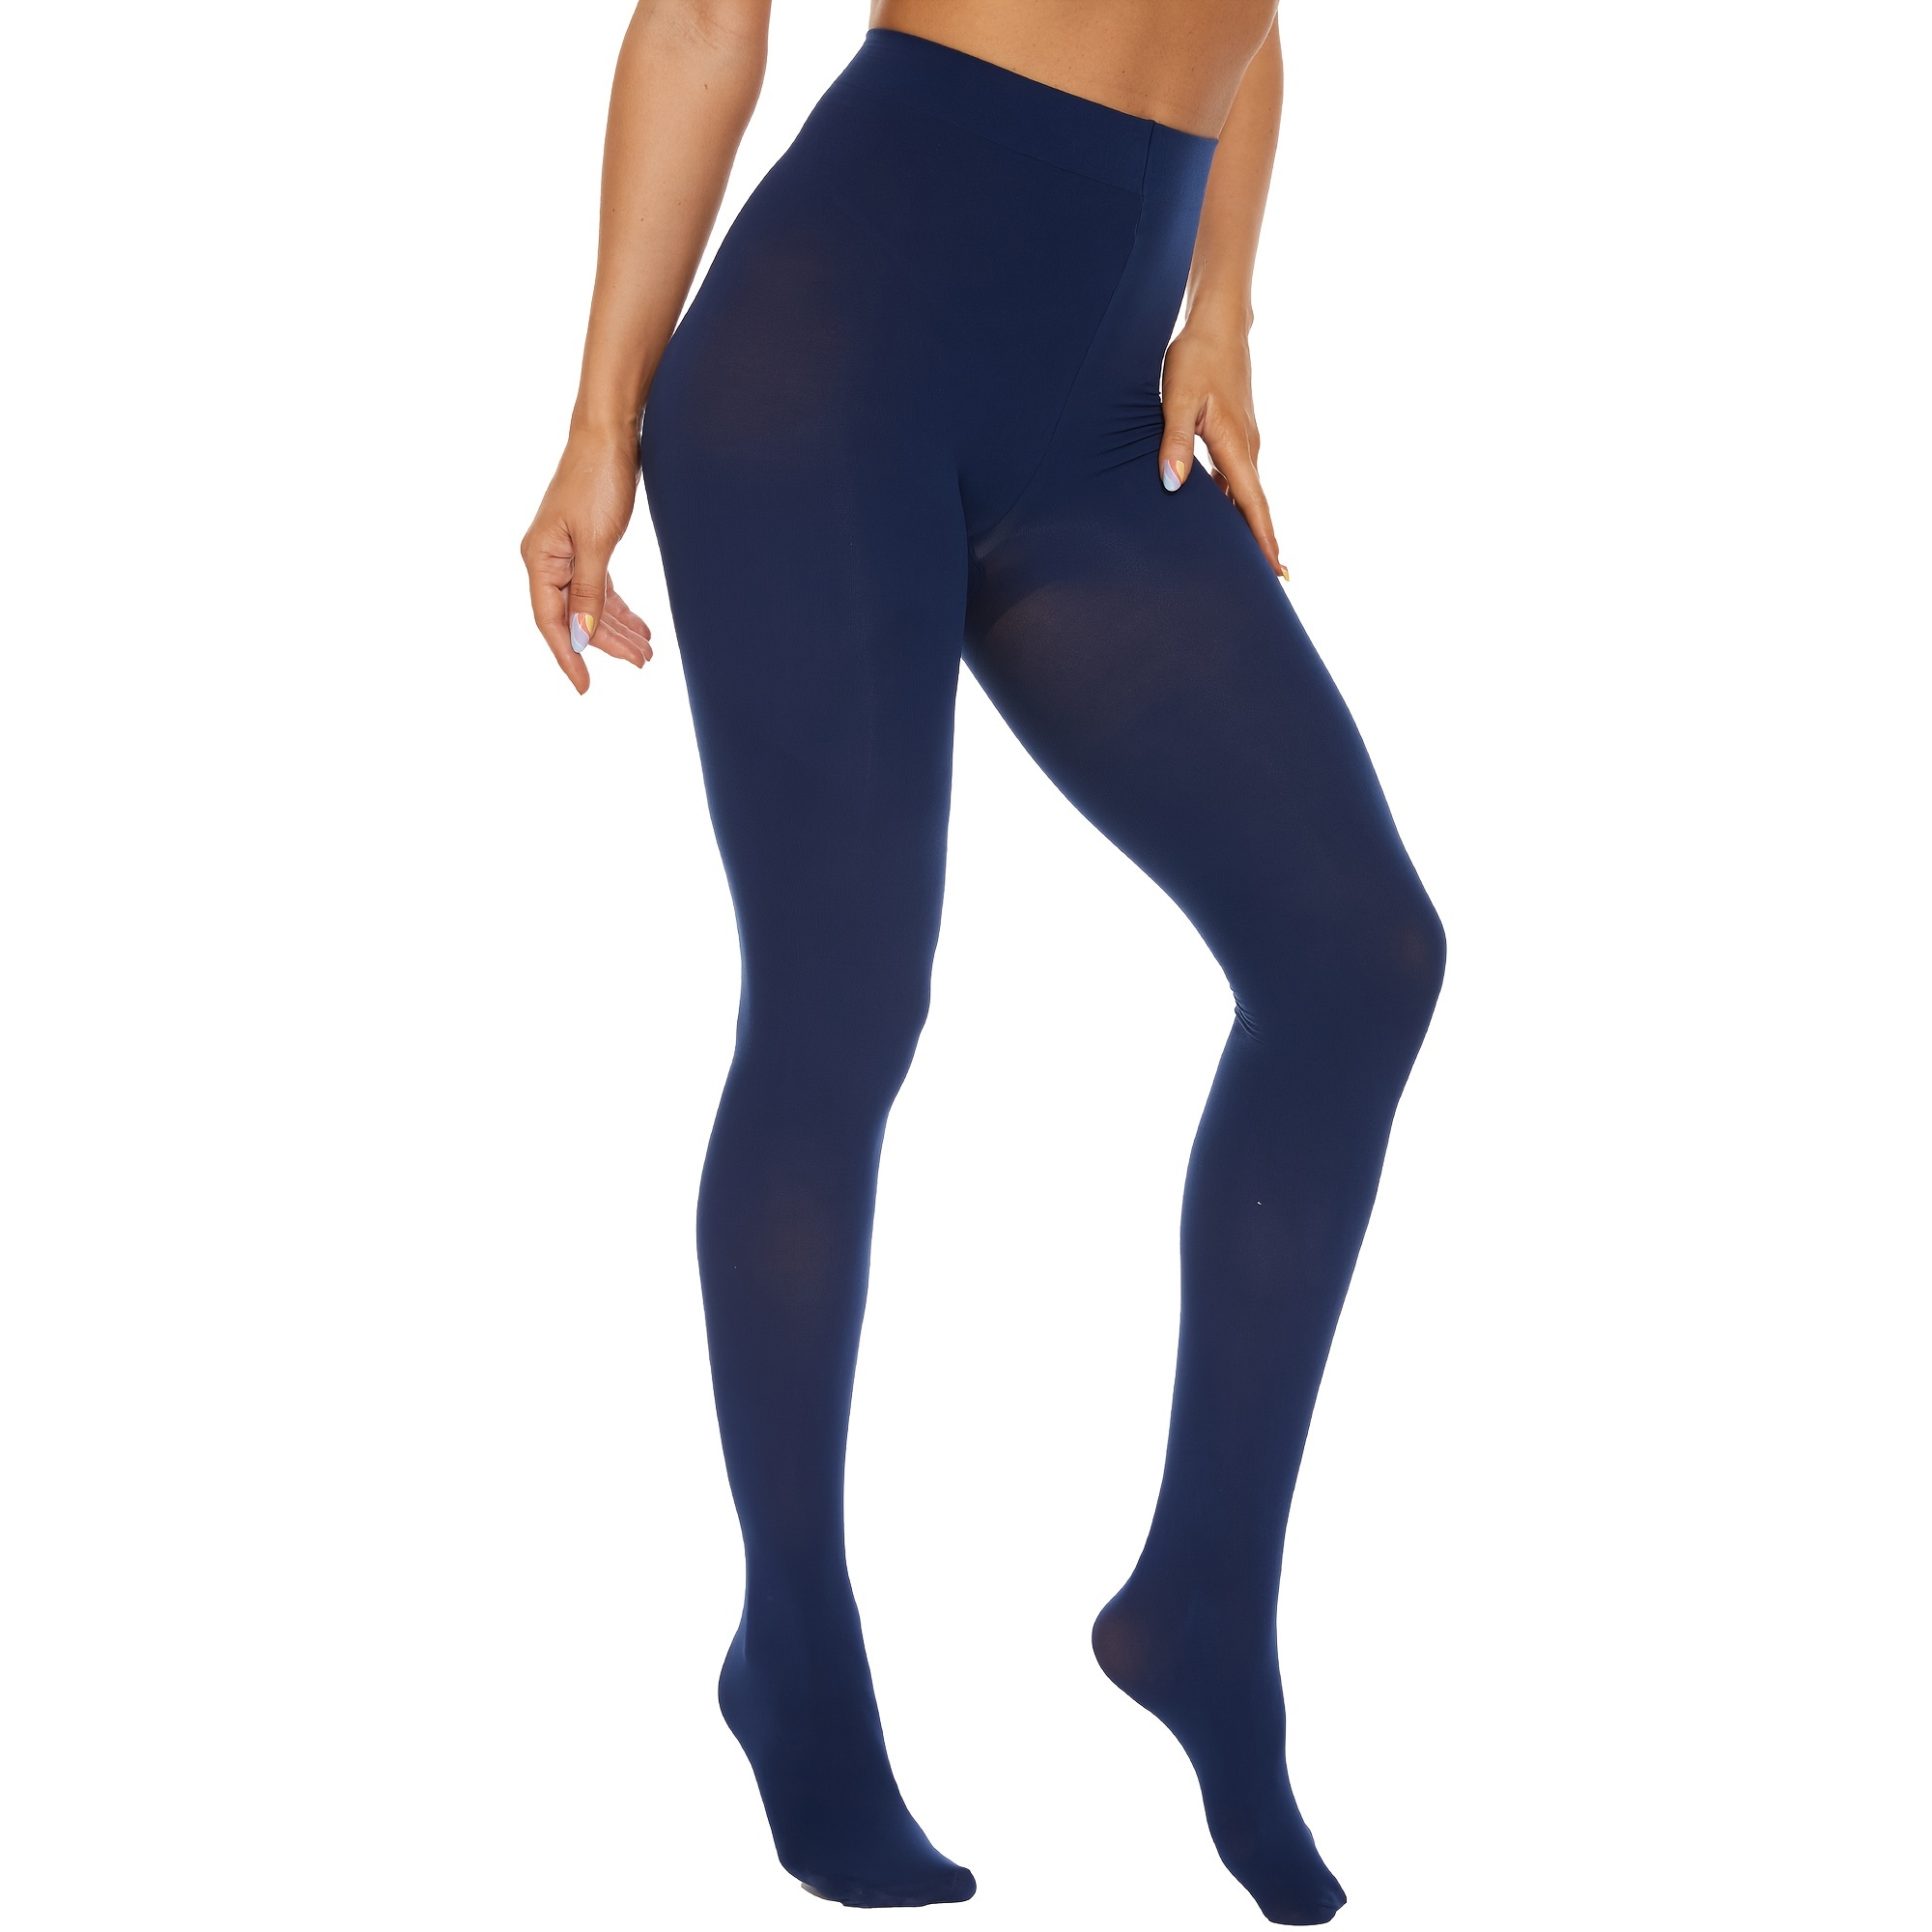 leg elegant Women's 80 Den Microfiber Soft Opaque Tights Pantyhose (Clover  Green, S/M) at  Women's Clothing store